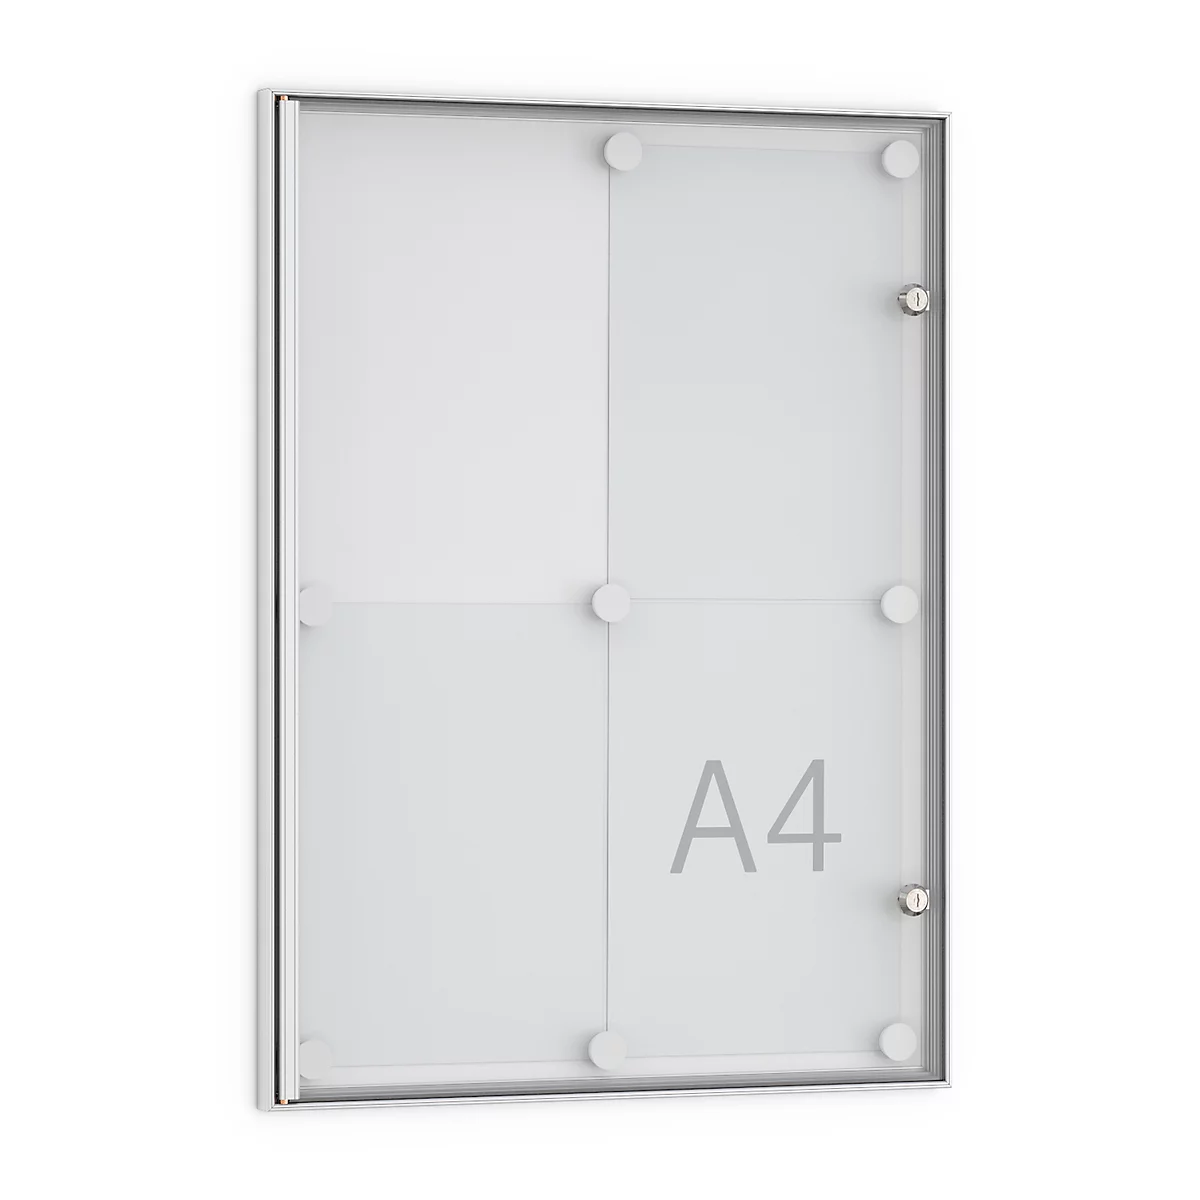 Tablón de anuncios plano, en punta, 4 x DIN A4, puerta totalmente de cristal acrílico